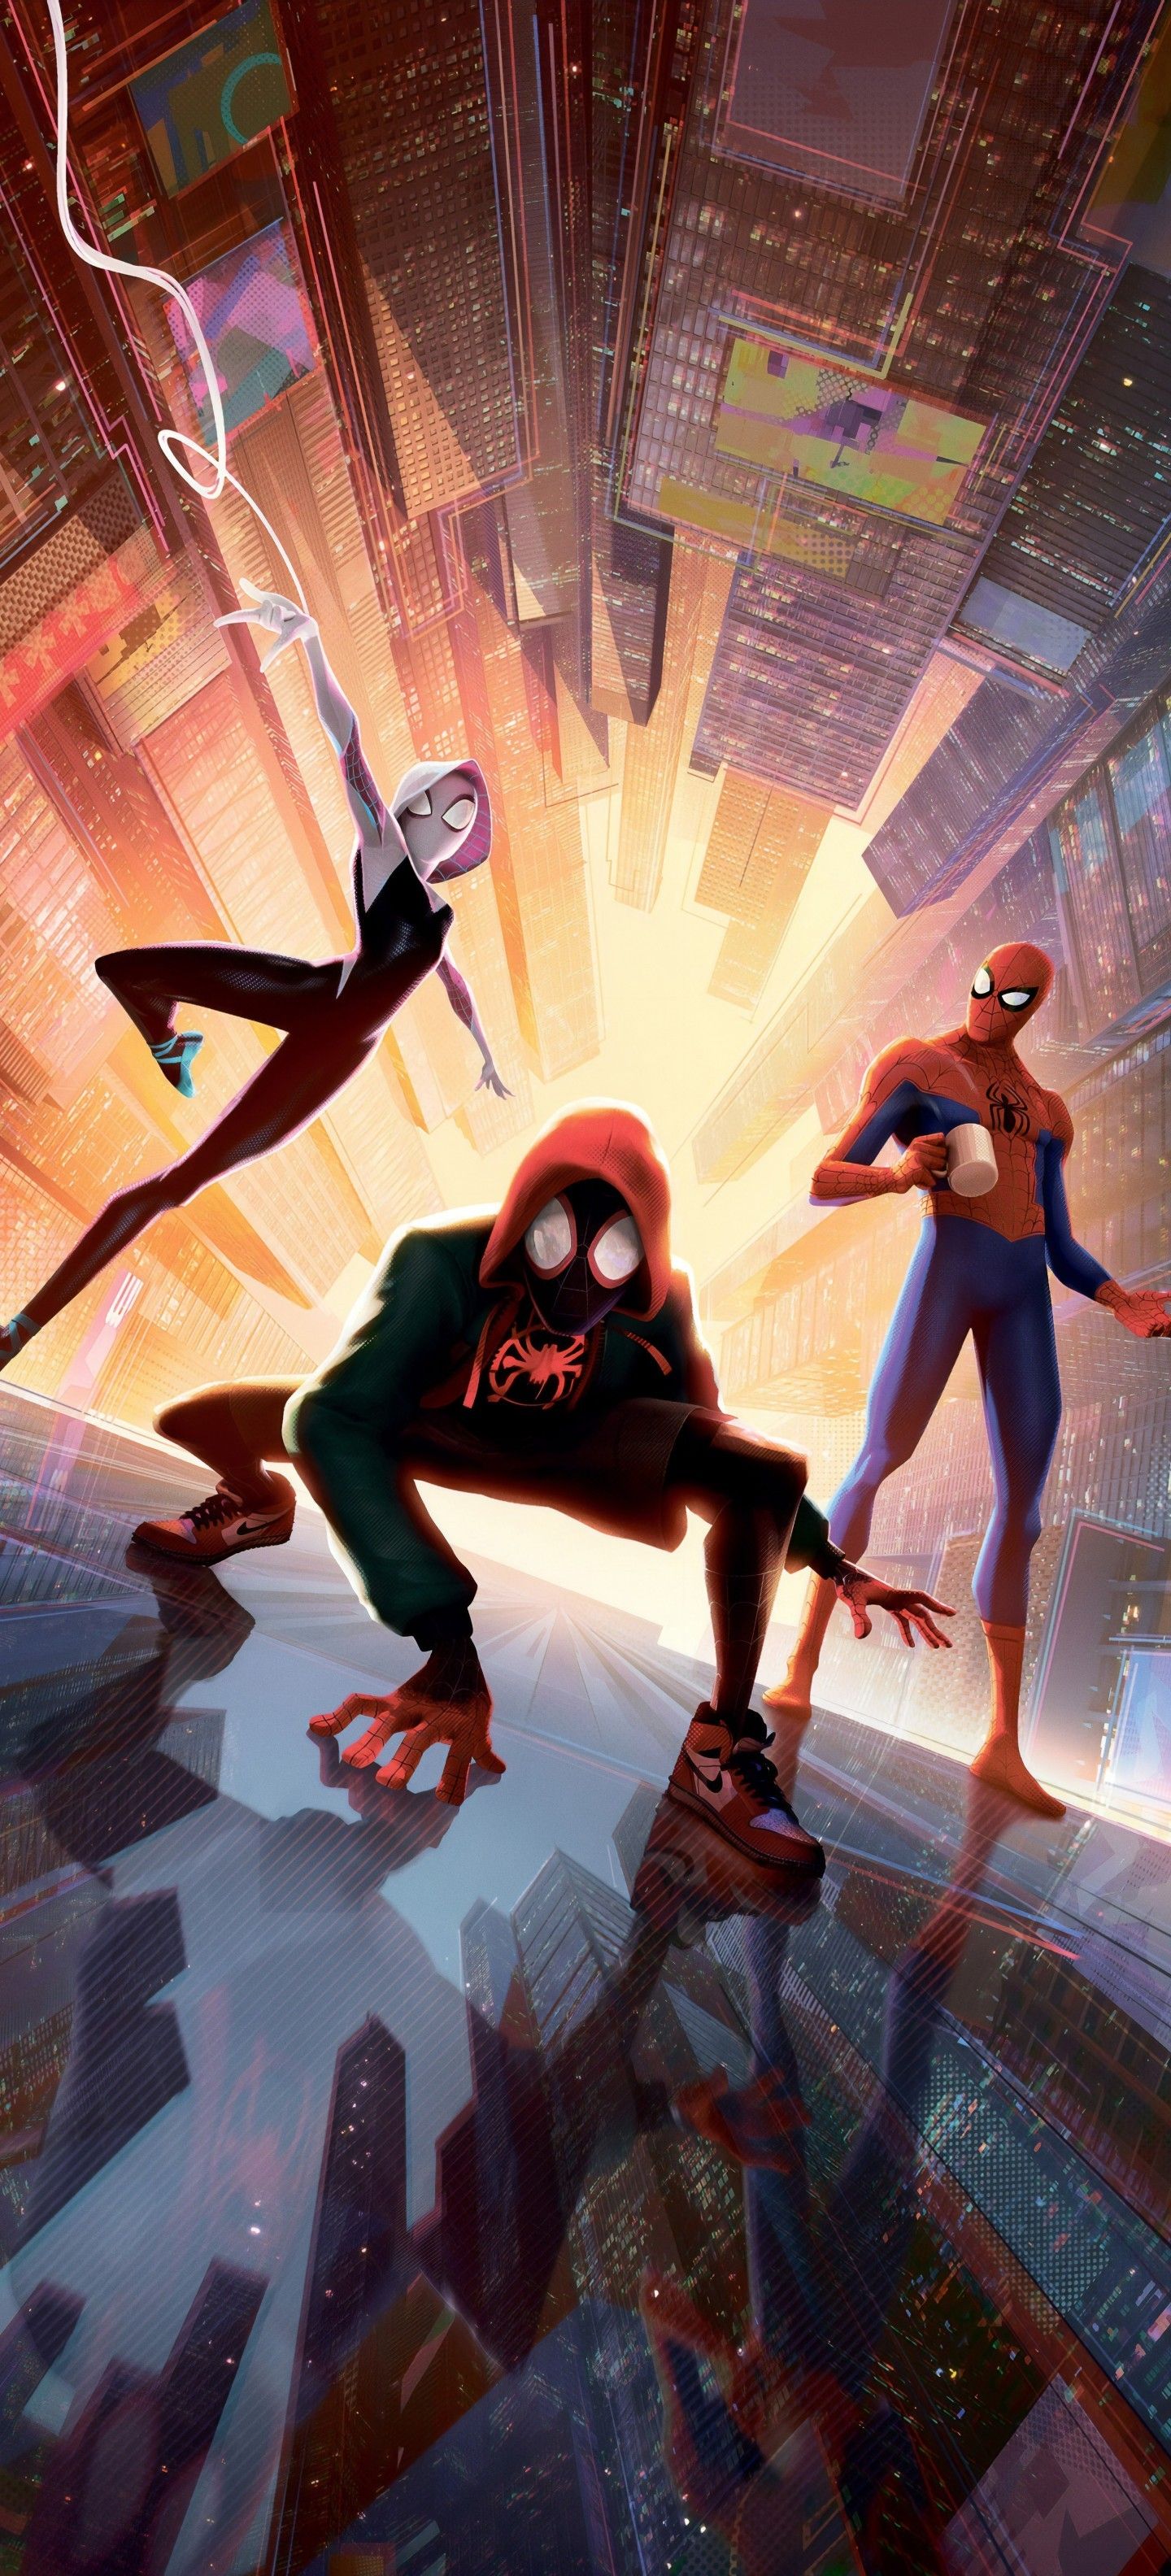 Download 1440x3168 Spider Gwen, Miles Morales, Spider Man: Into The Spider Verse, Animation, Artwork Wallpaper For OnePlus 8 Pro, Oppo Find X2